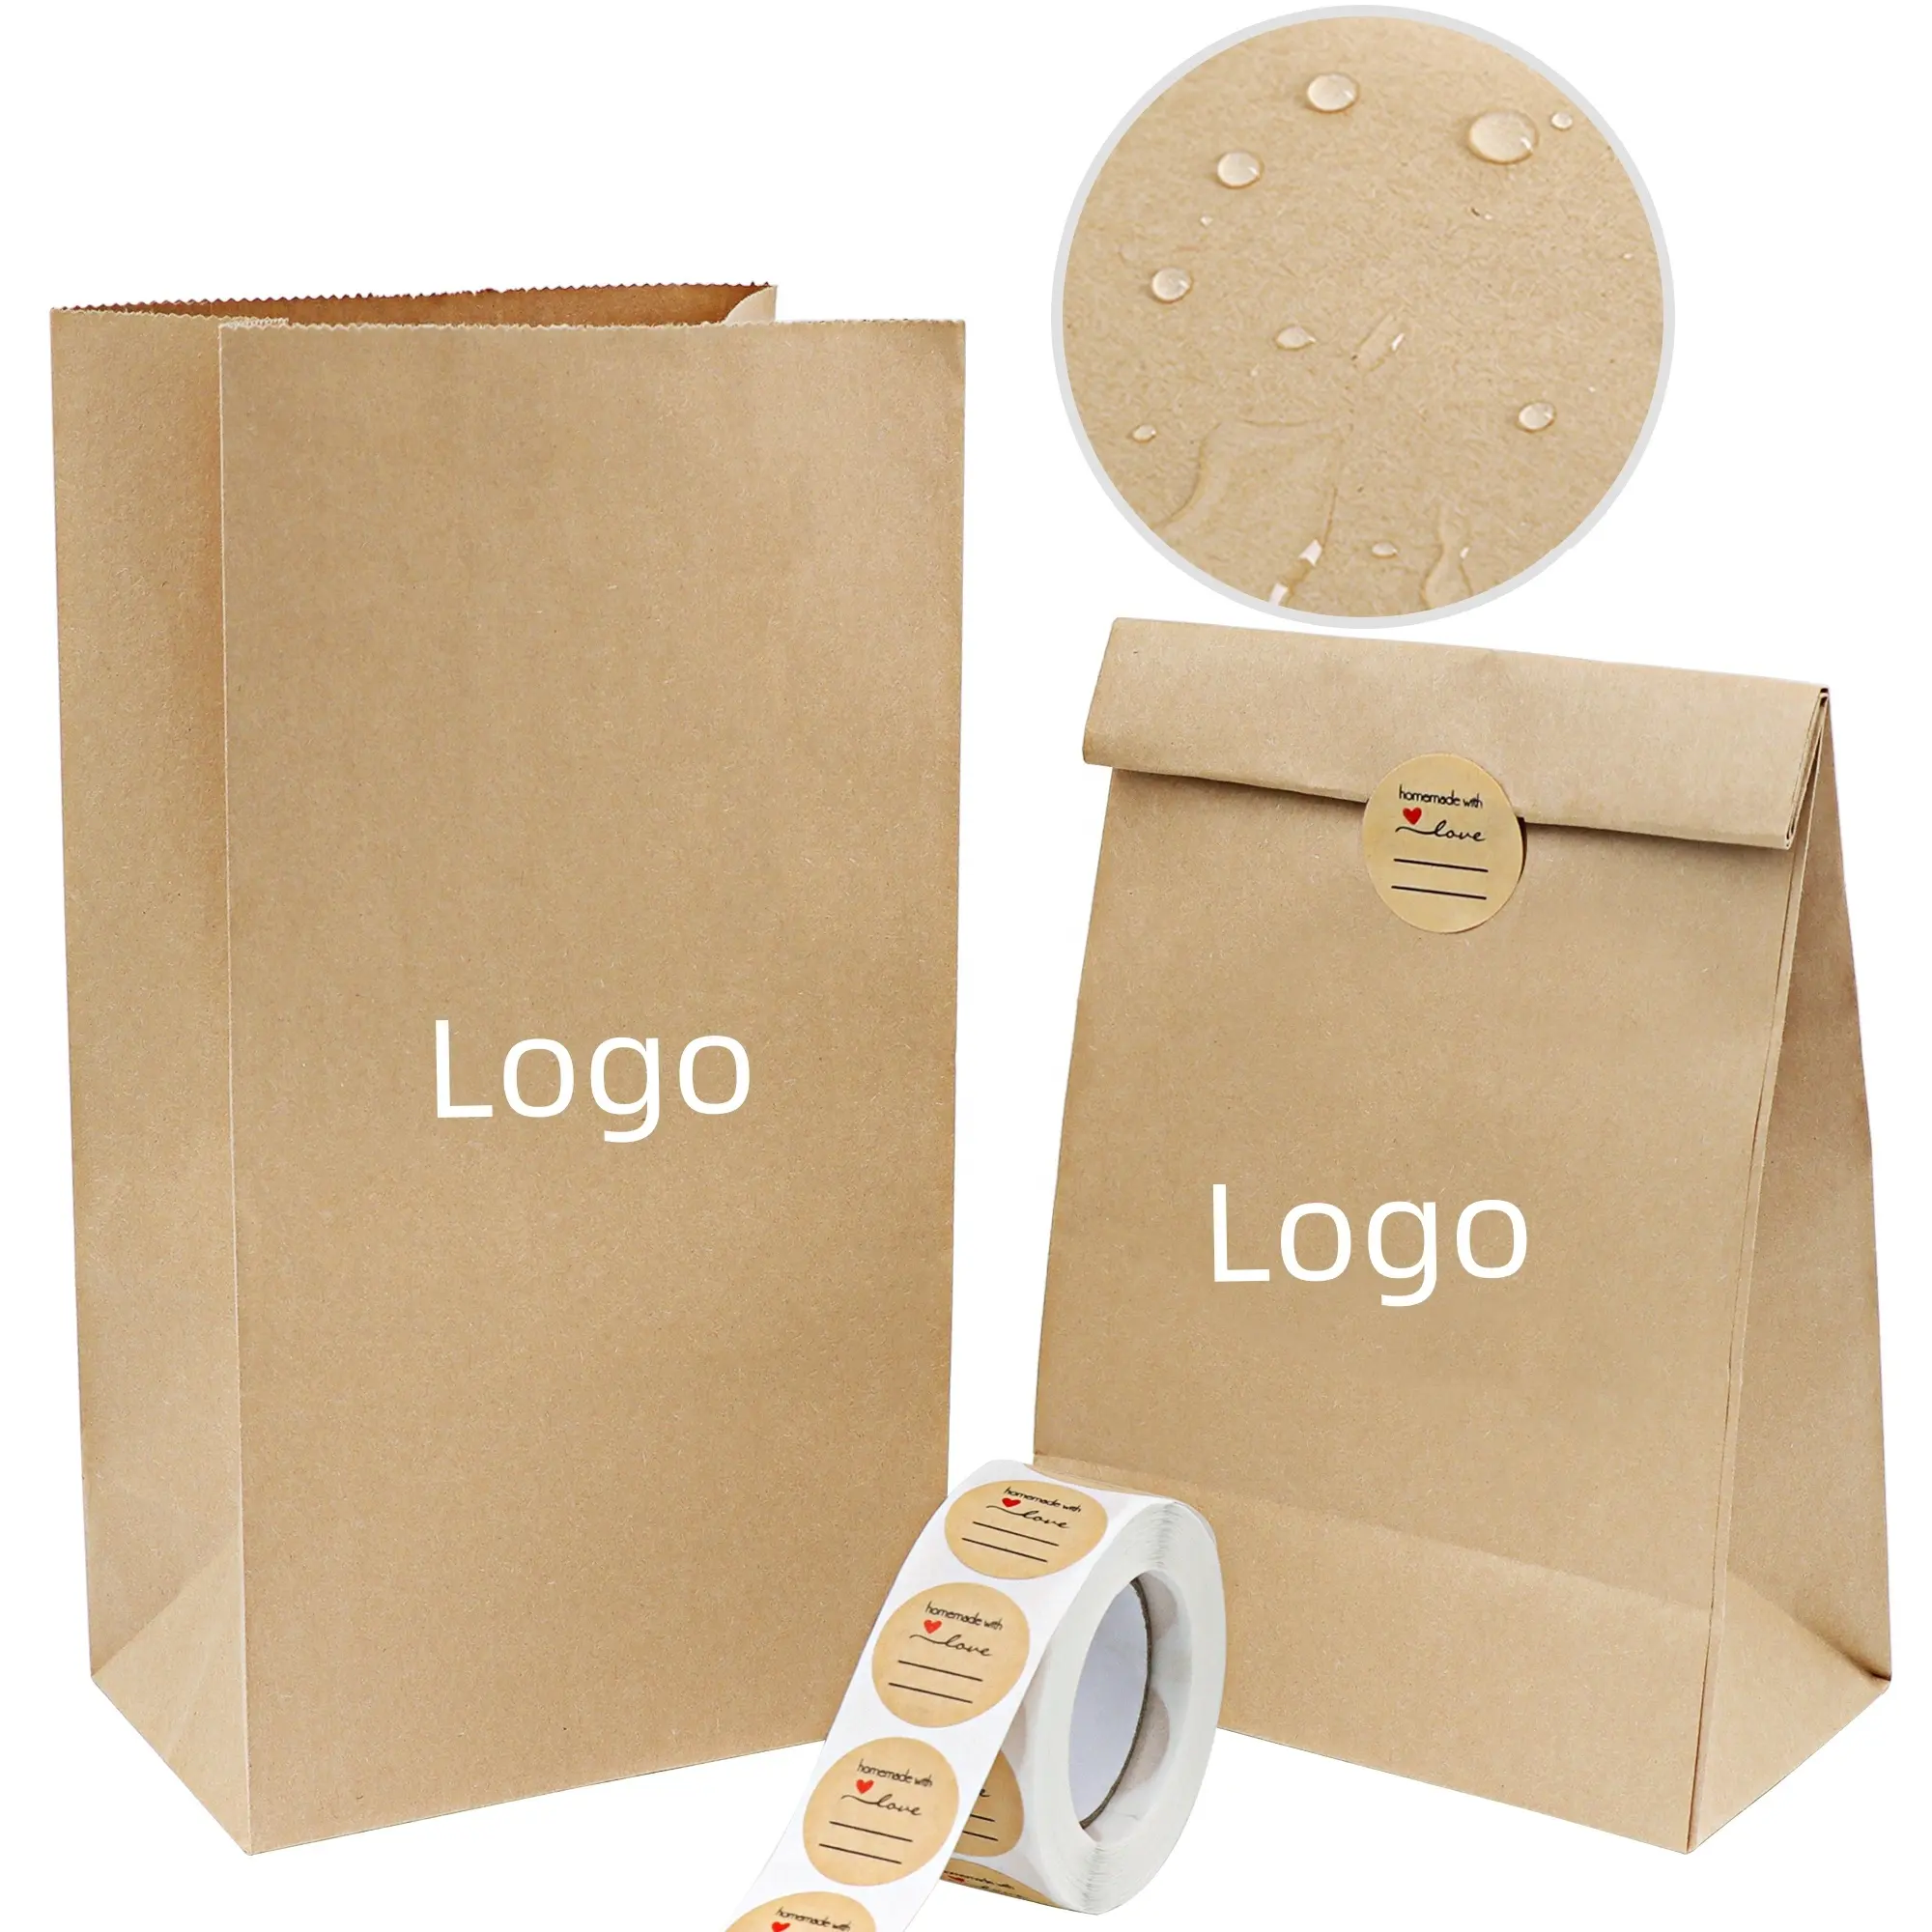 Bolsas de papel Kraft aceptadas con impresión de logotipos para alimentos, uso de entrega, bolsas de papel artesanales desechables